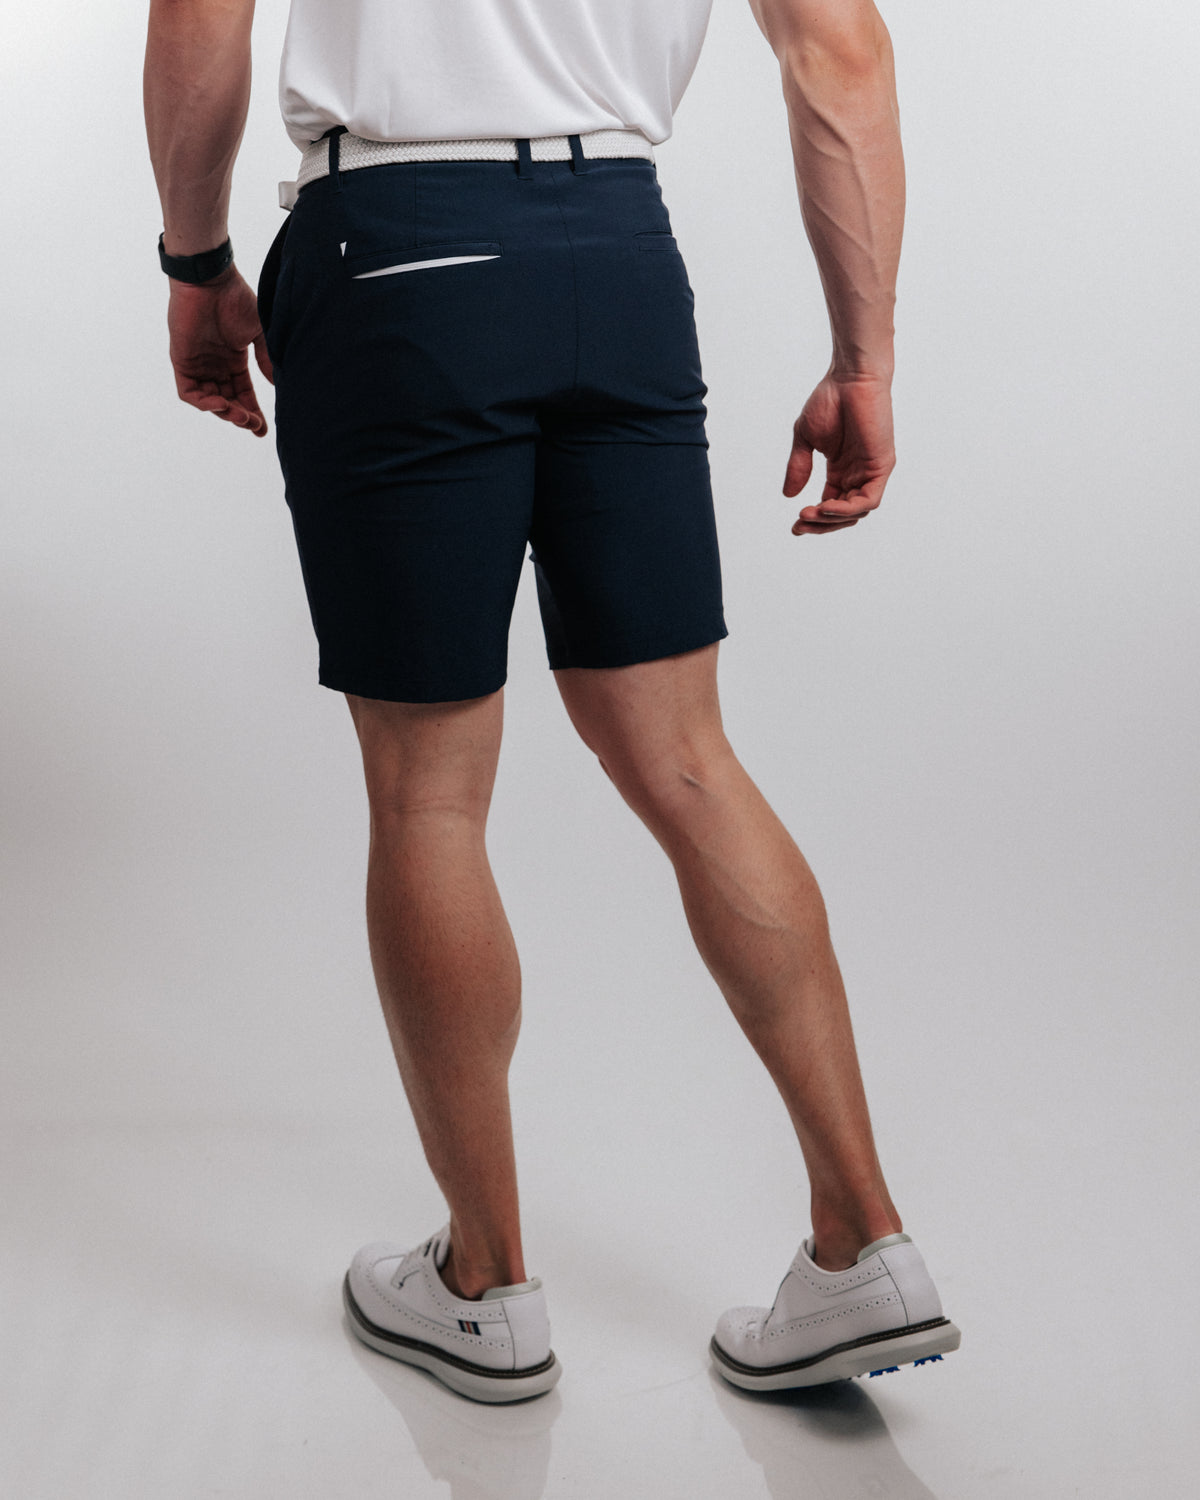 Primo Navy Blue Shorts - 7", 9", 11"